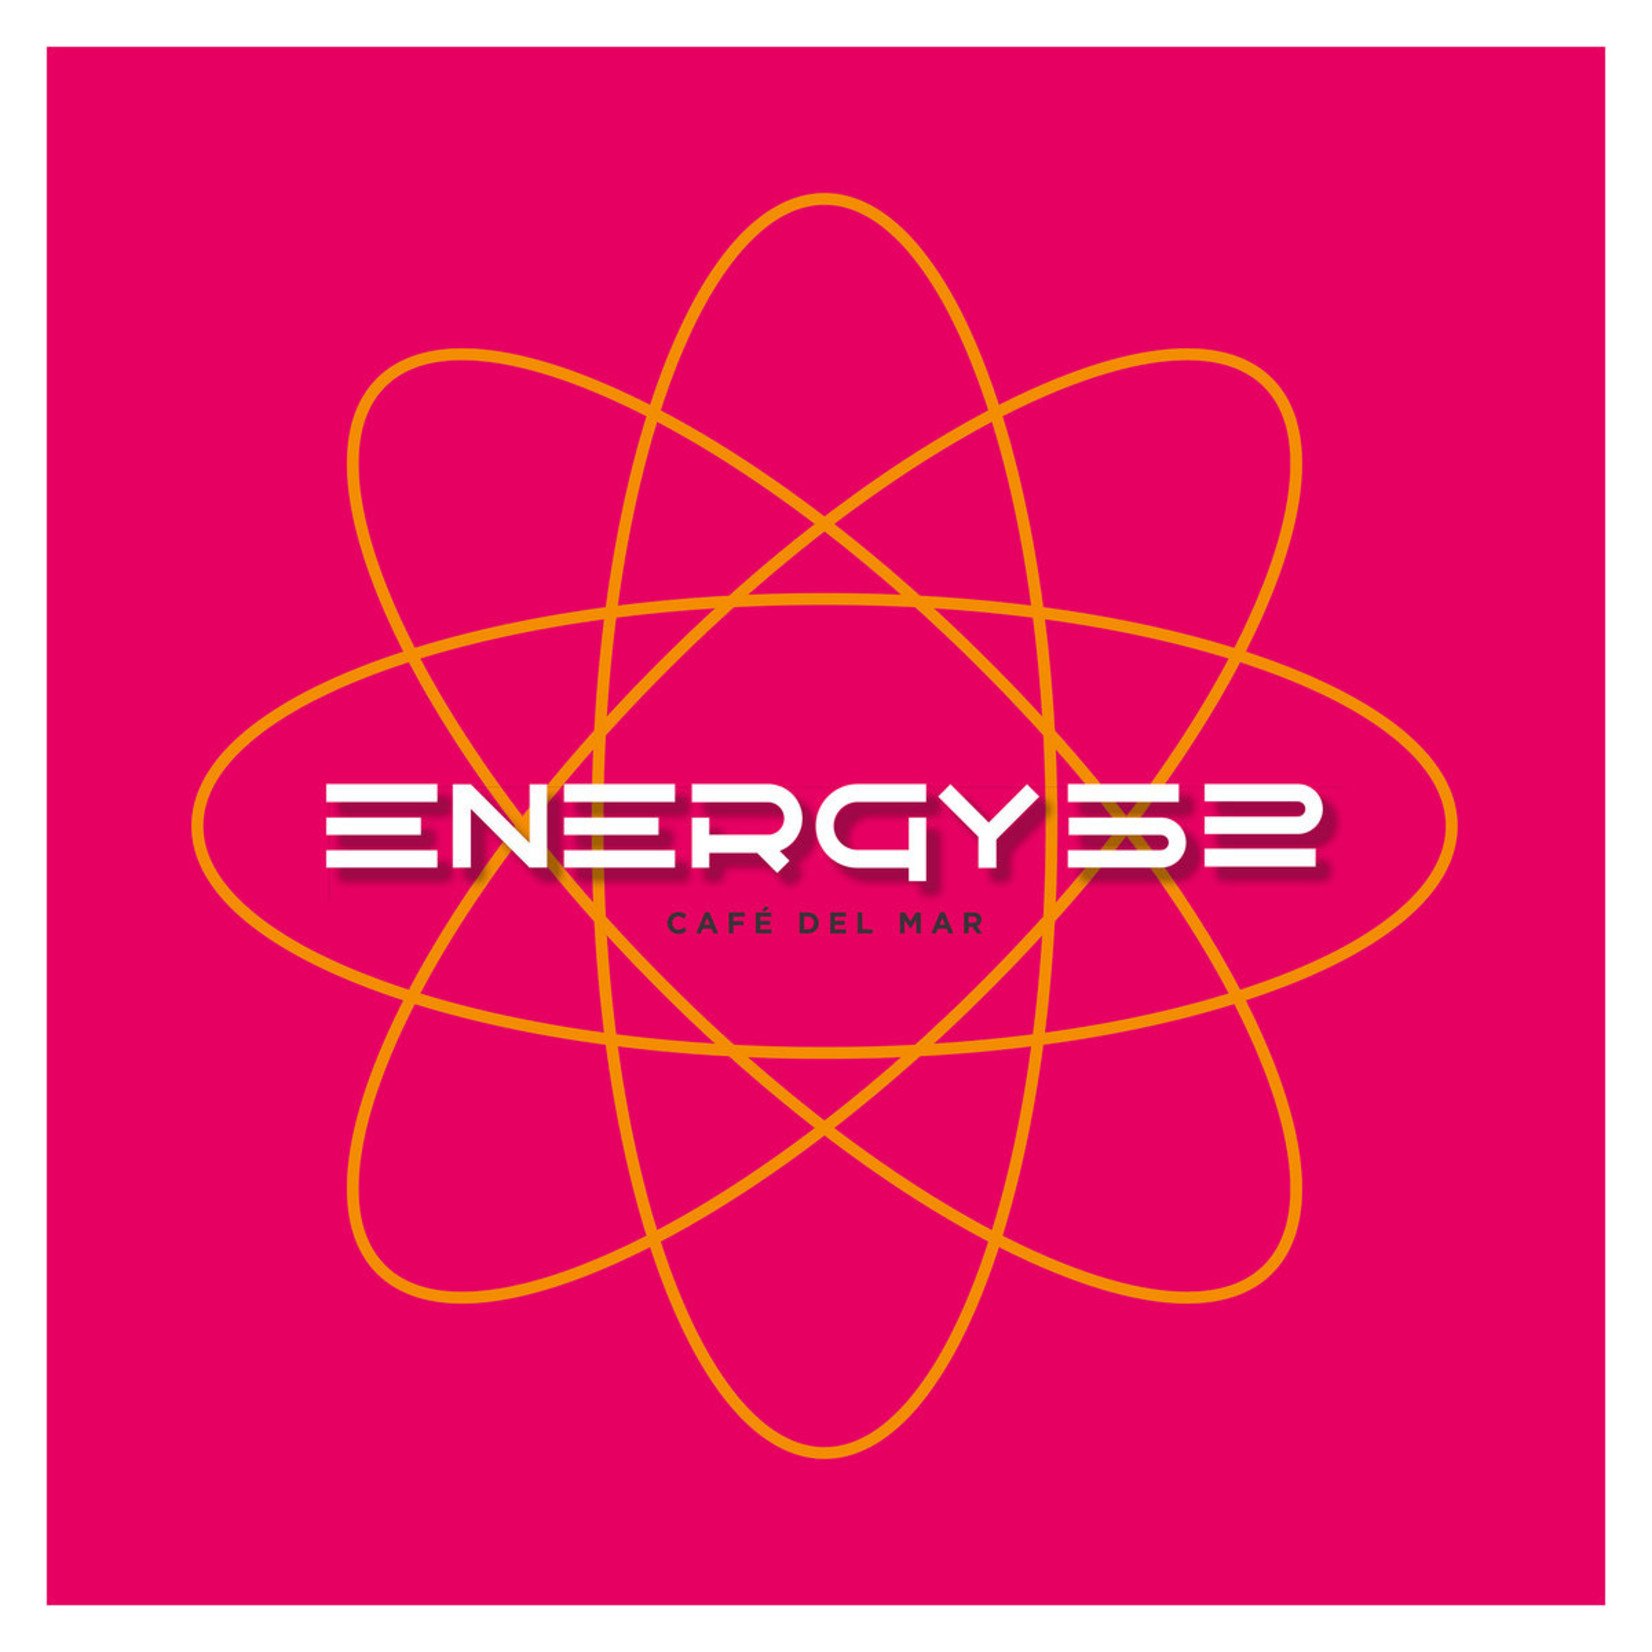 Energy 52 – Café Del Mar